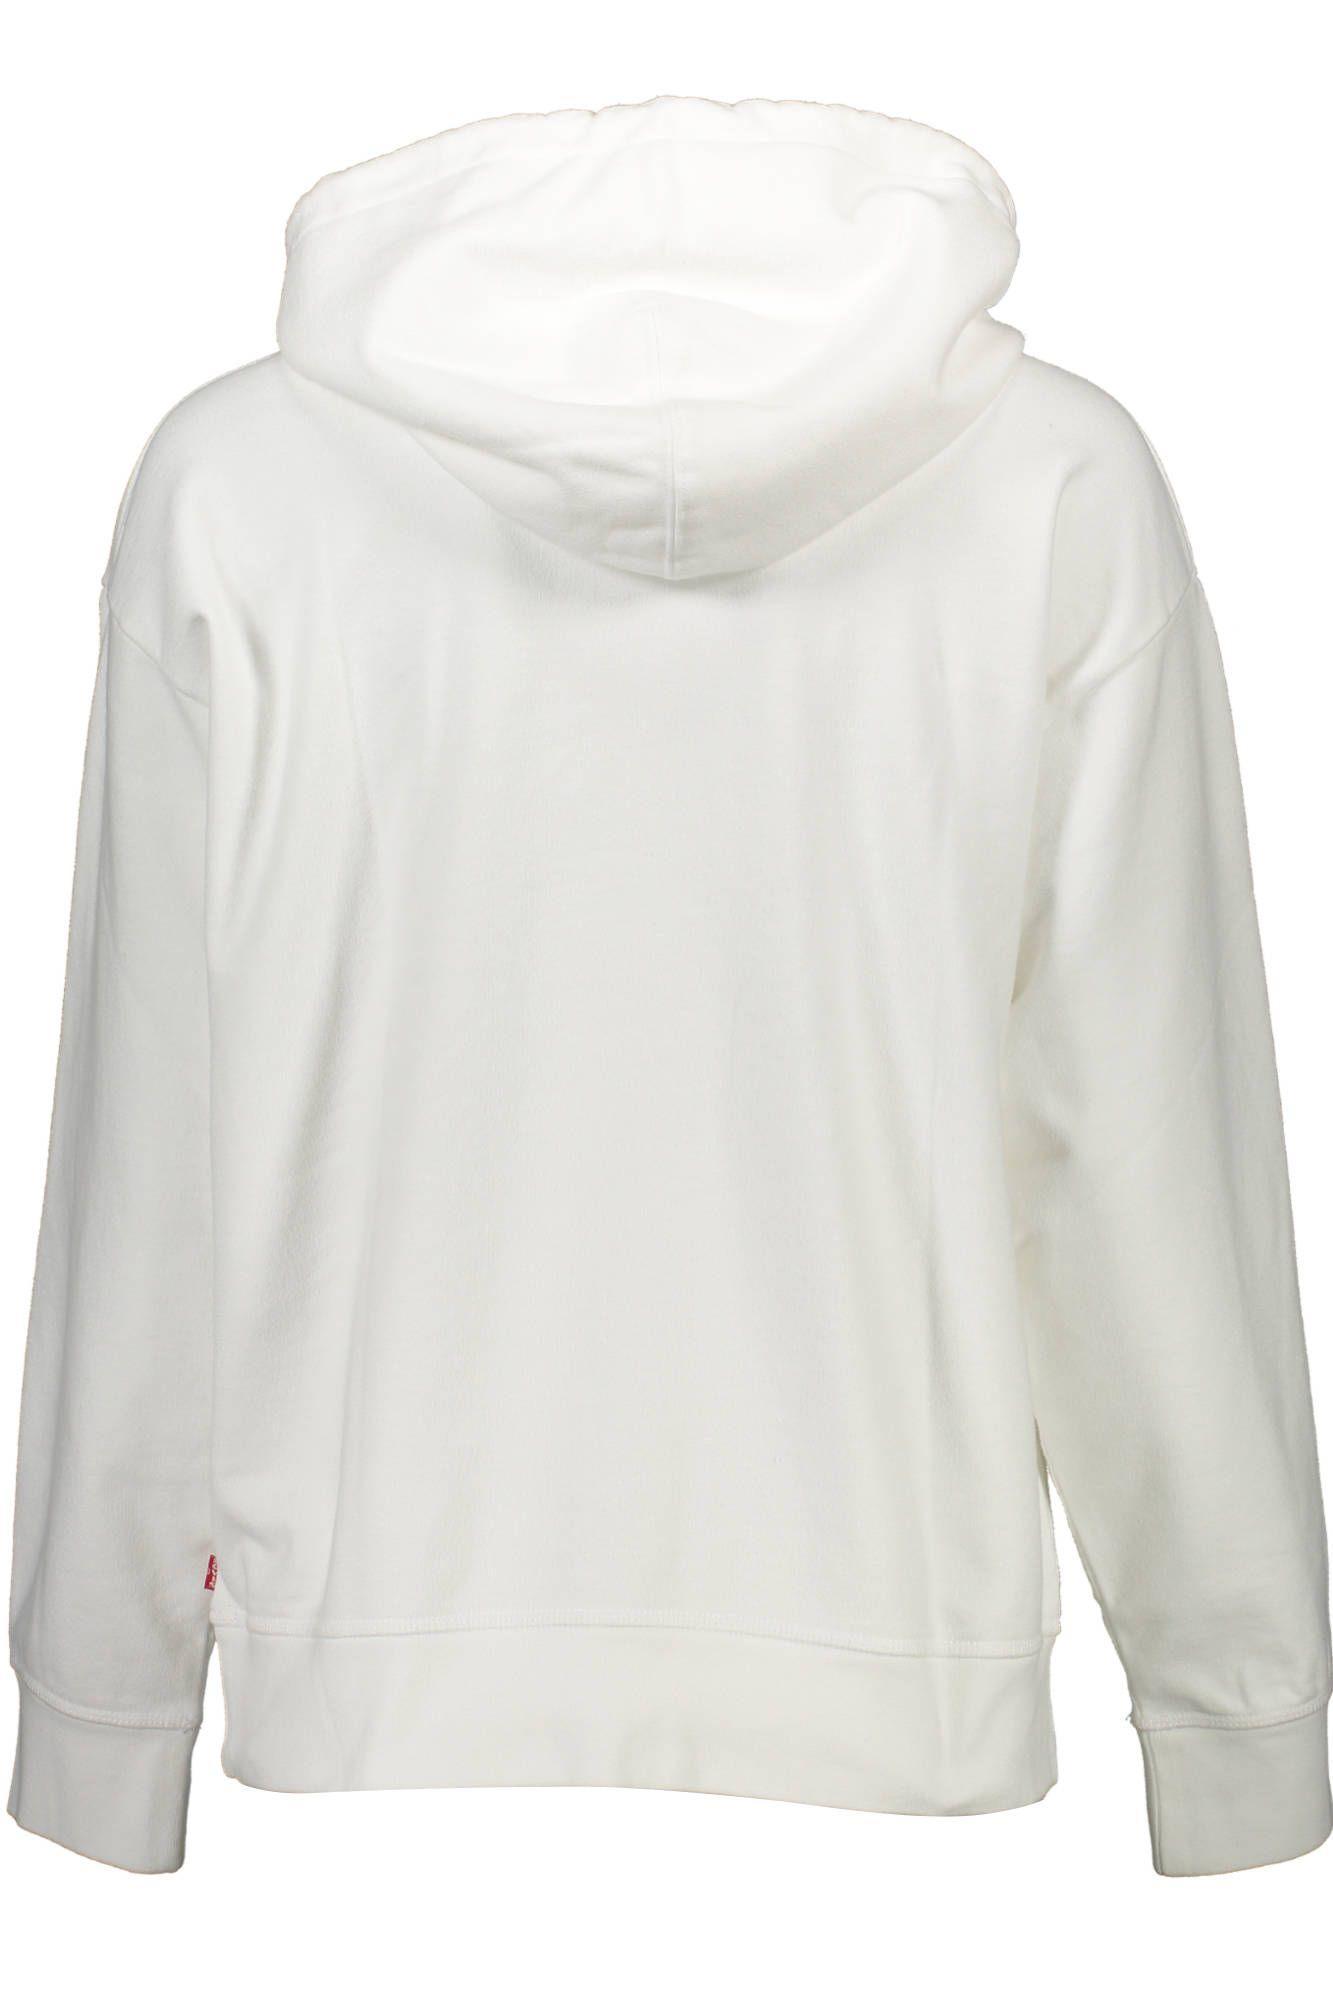 Levi's Chic White Cotton Hooded Sweatshirt With Logo - PER.FASHION